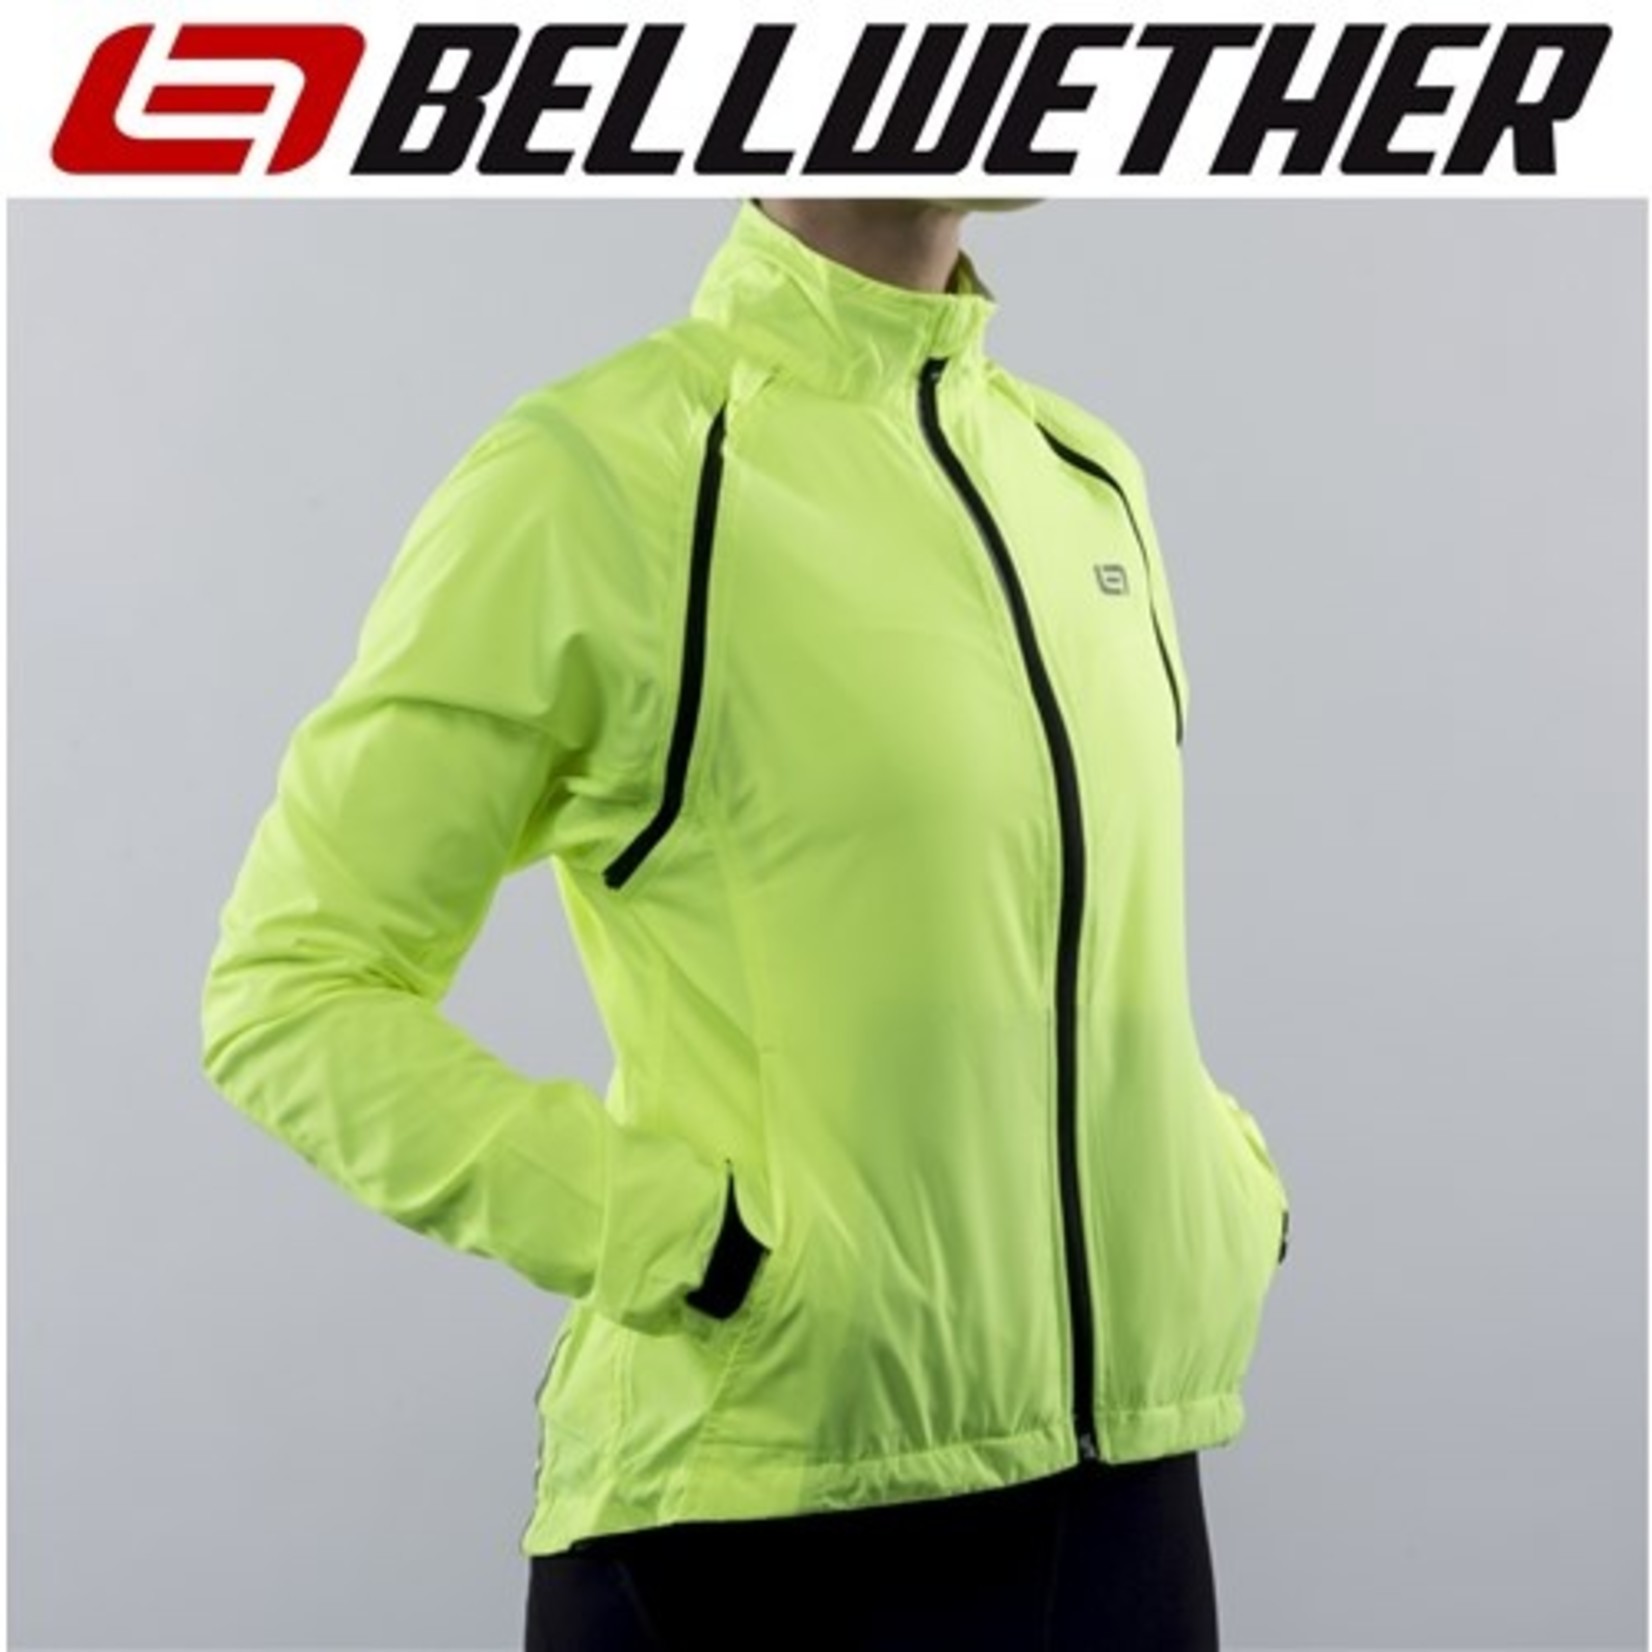 Bellwether Bellwether Velocity Women's Convertible Jacket/Vest - Hi-Vis - Medium